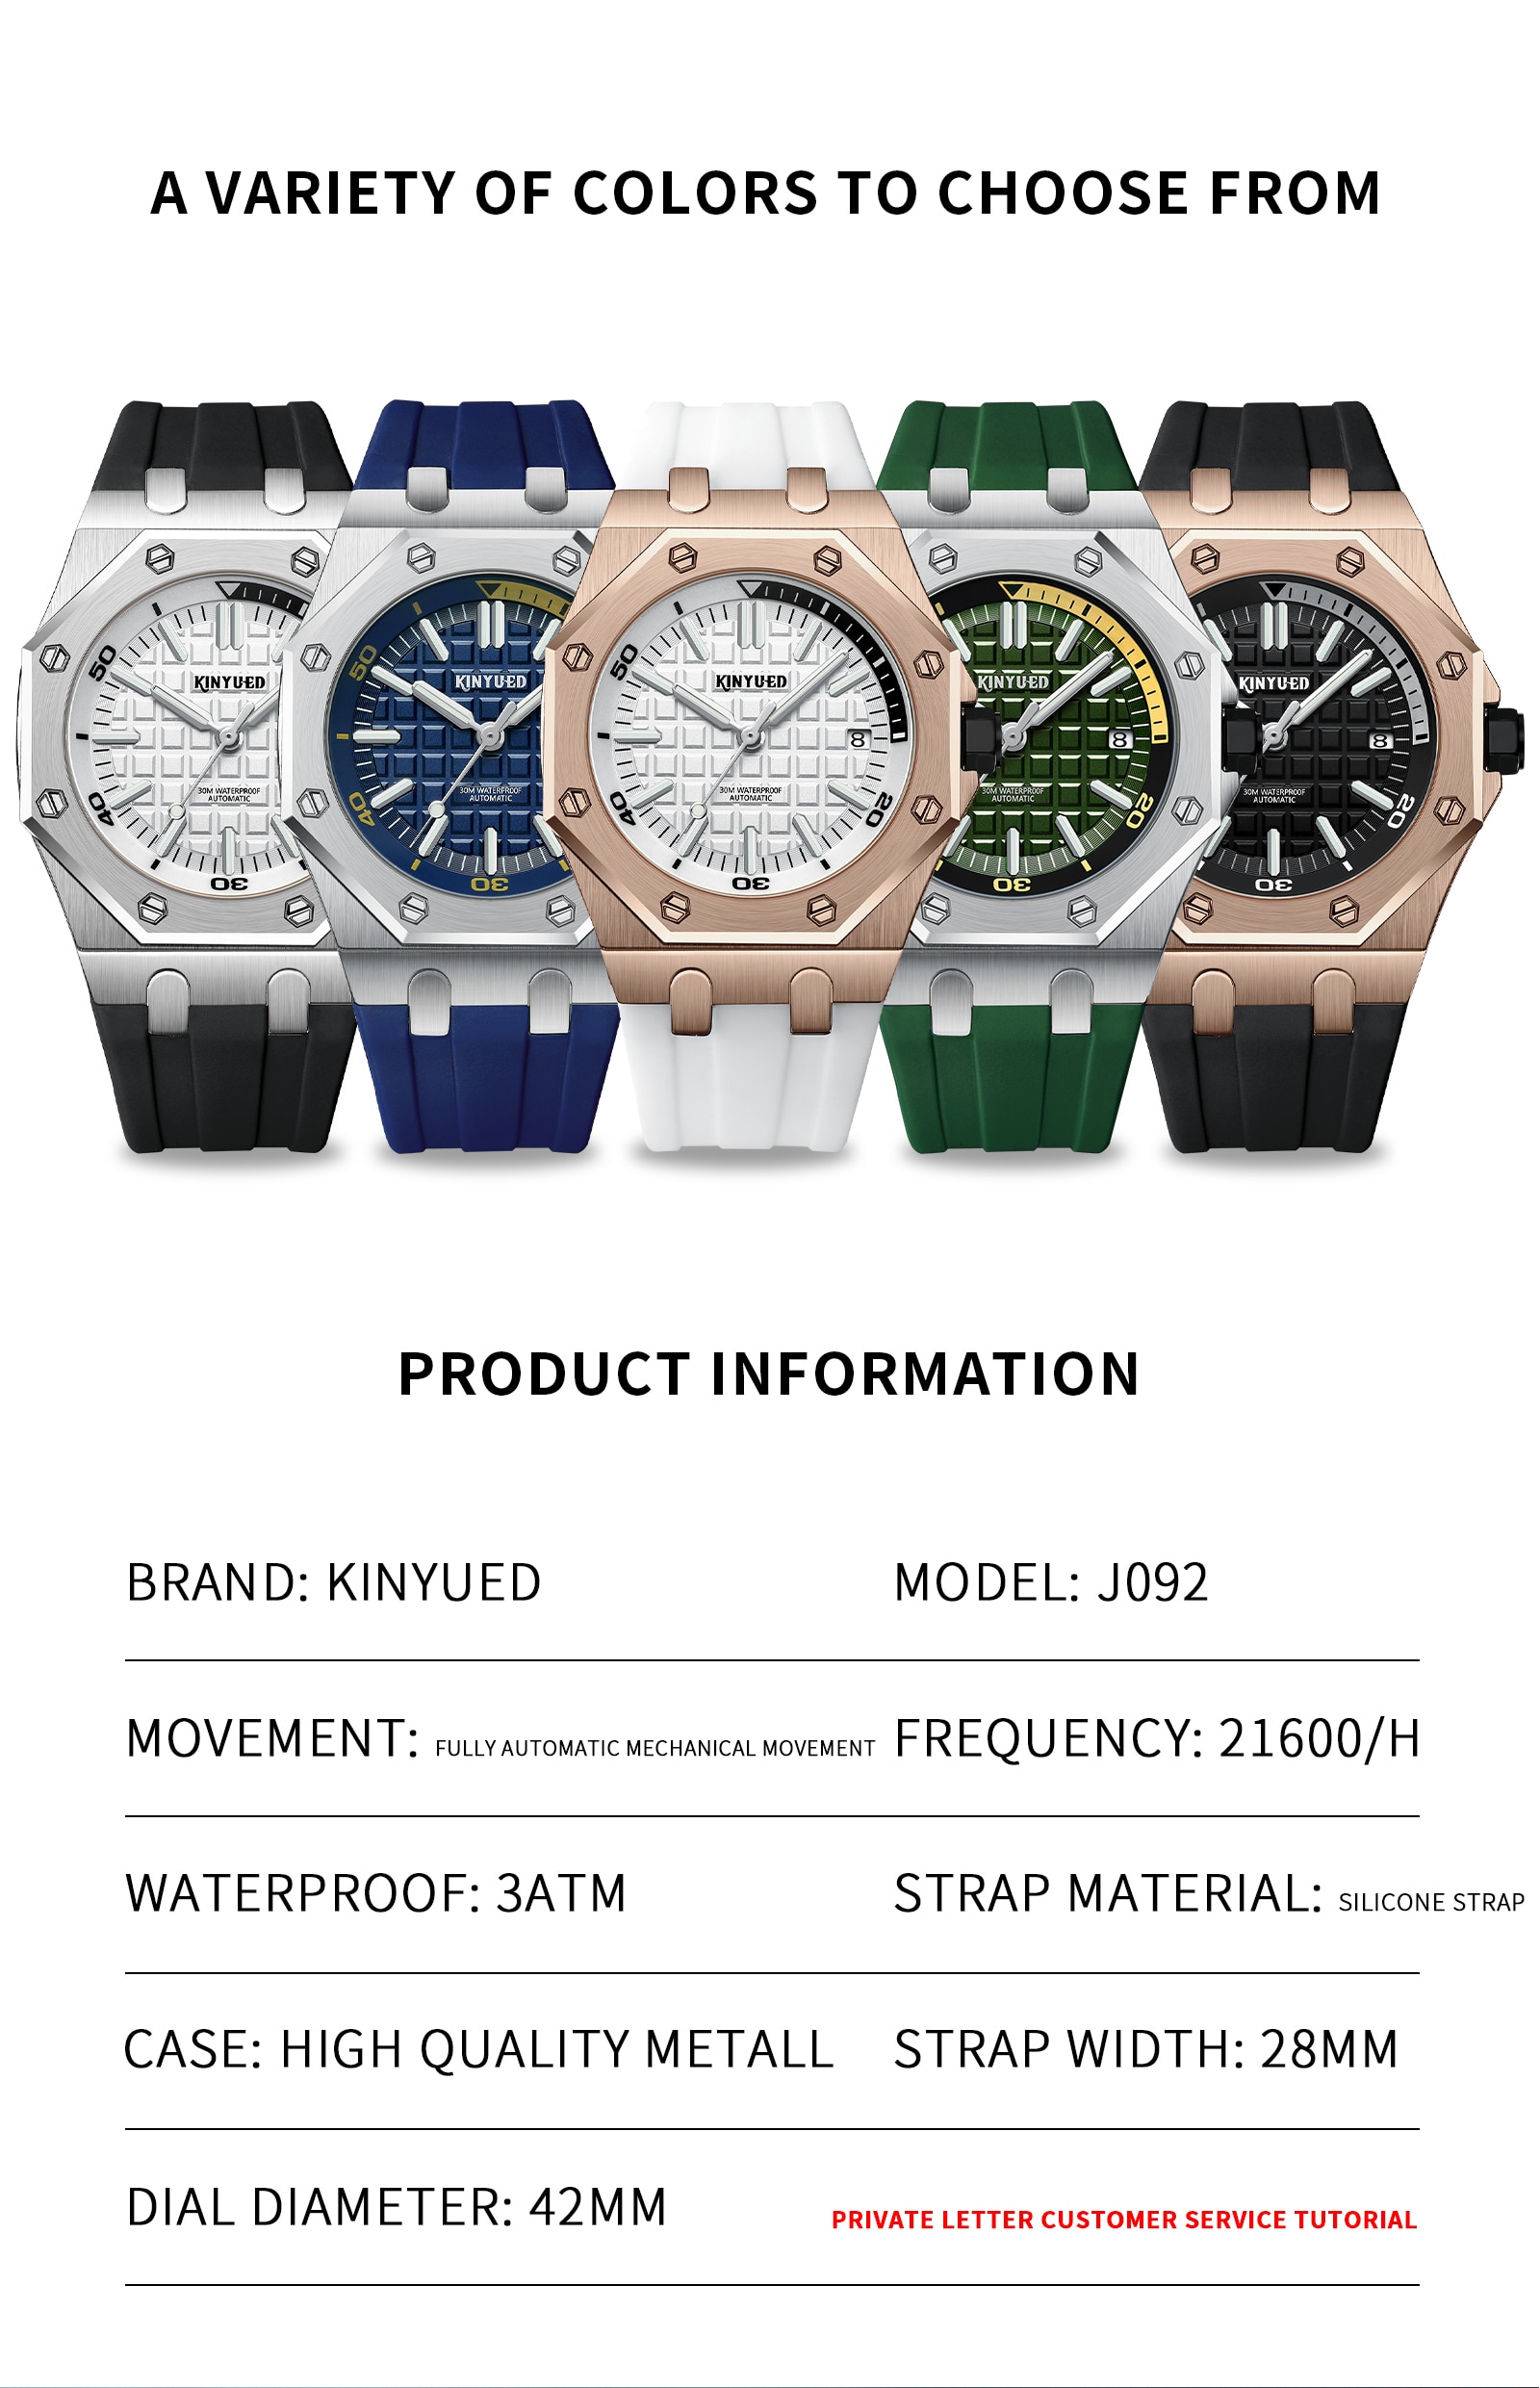 New Men's Watch Top Luxury Brand Automatic Mechanical Watch Men's Fashion Silicone Strap Waterproof Watch Date